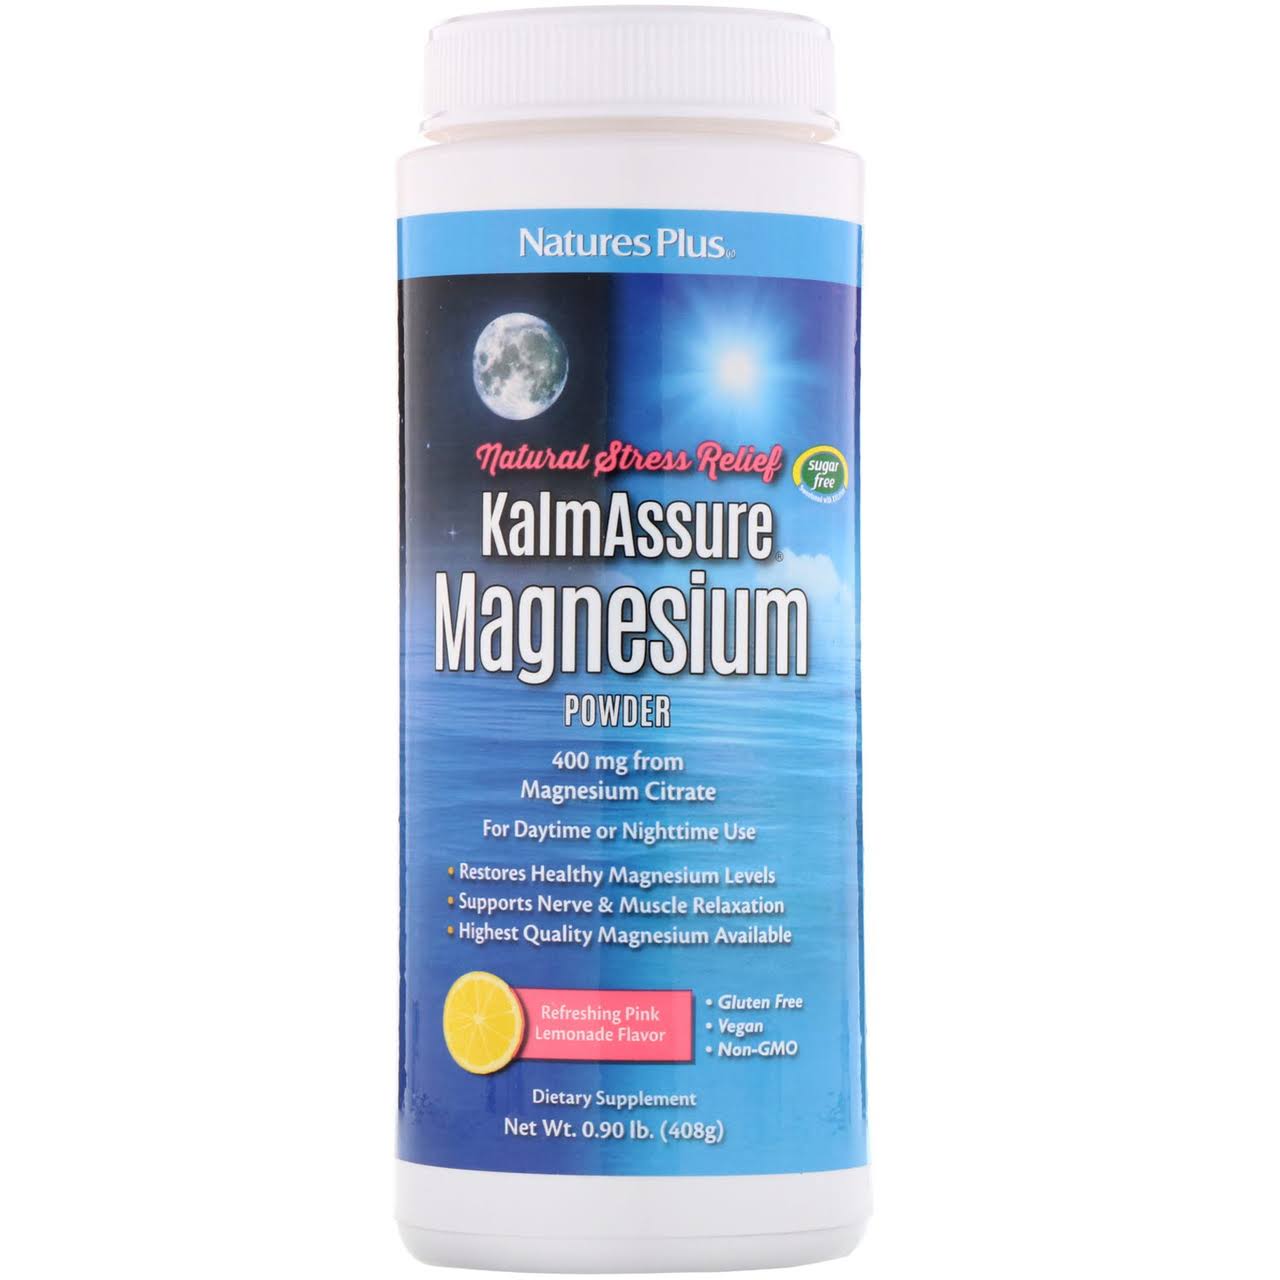 Nature's Plus Kalmassure Magnesium Powder - Pink Lemonade, 400mg, 0.70lbs